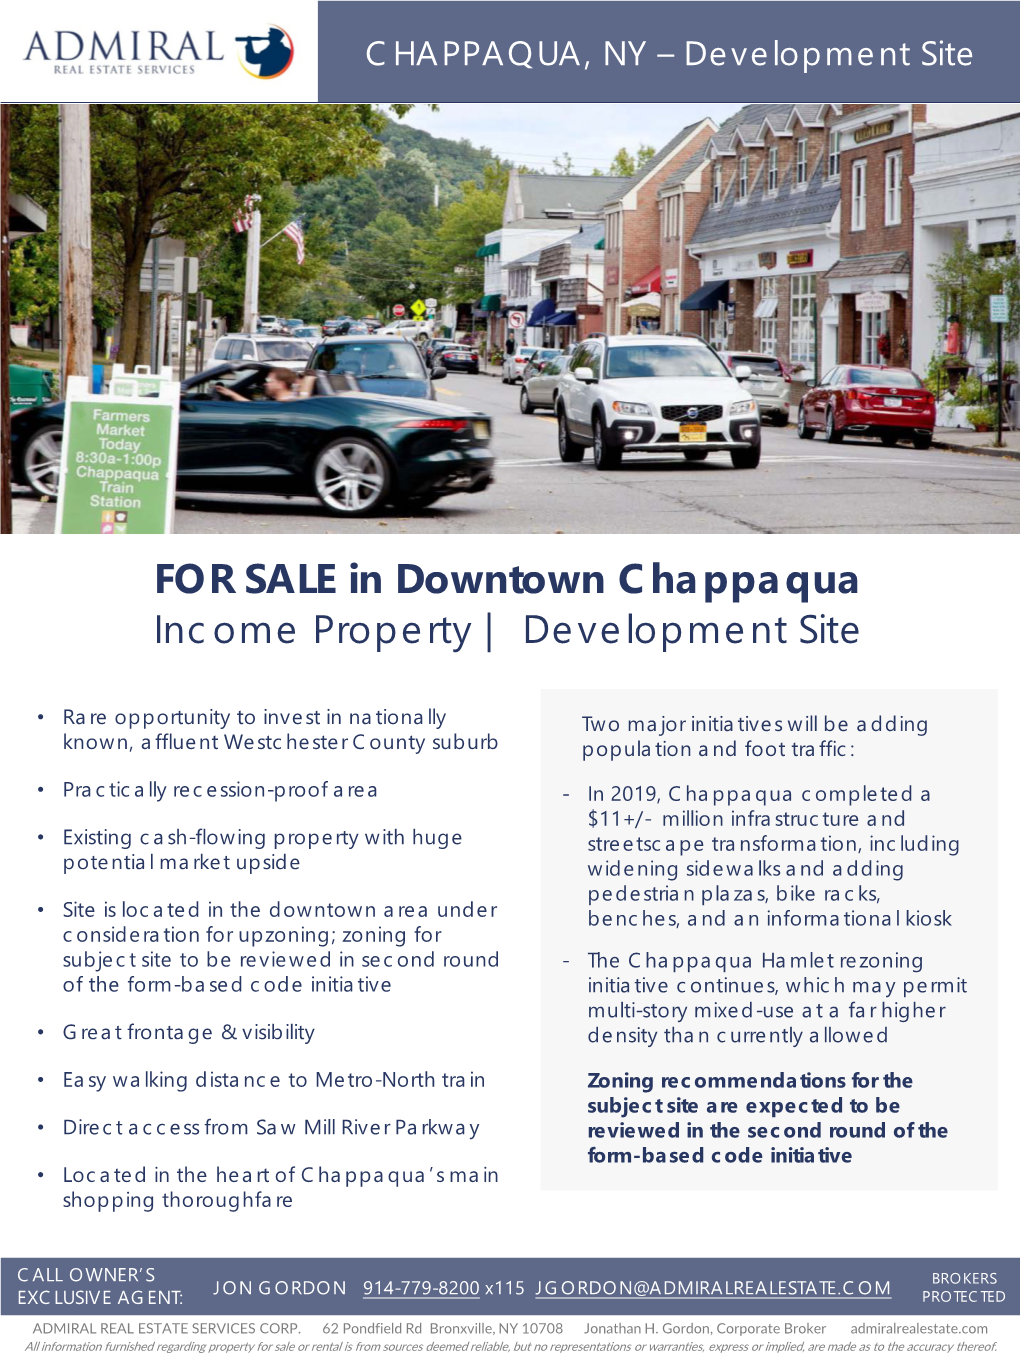 CHAPPAQUA, NY – Development Site